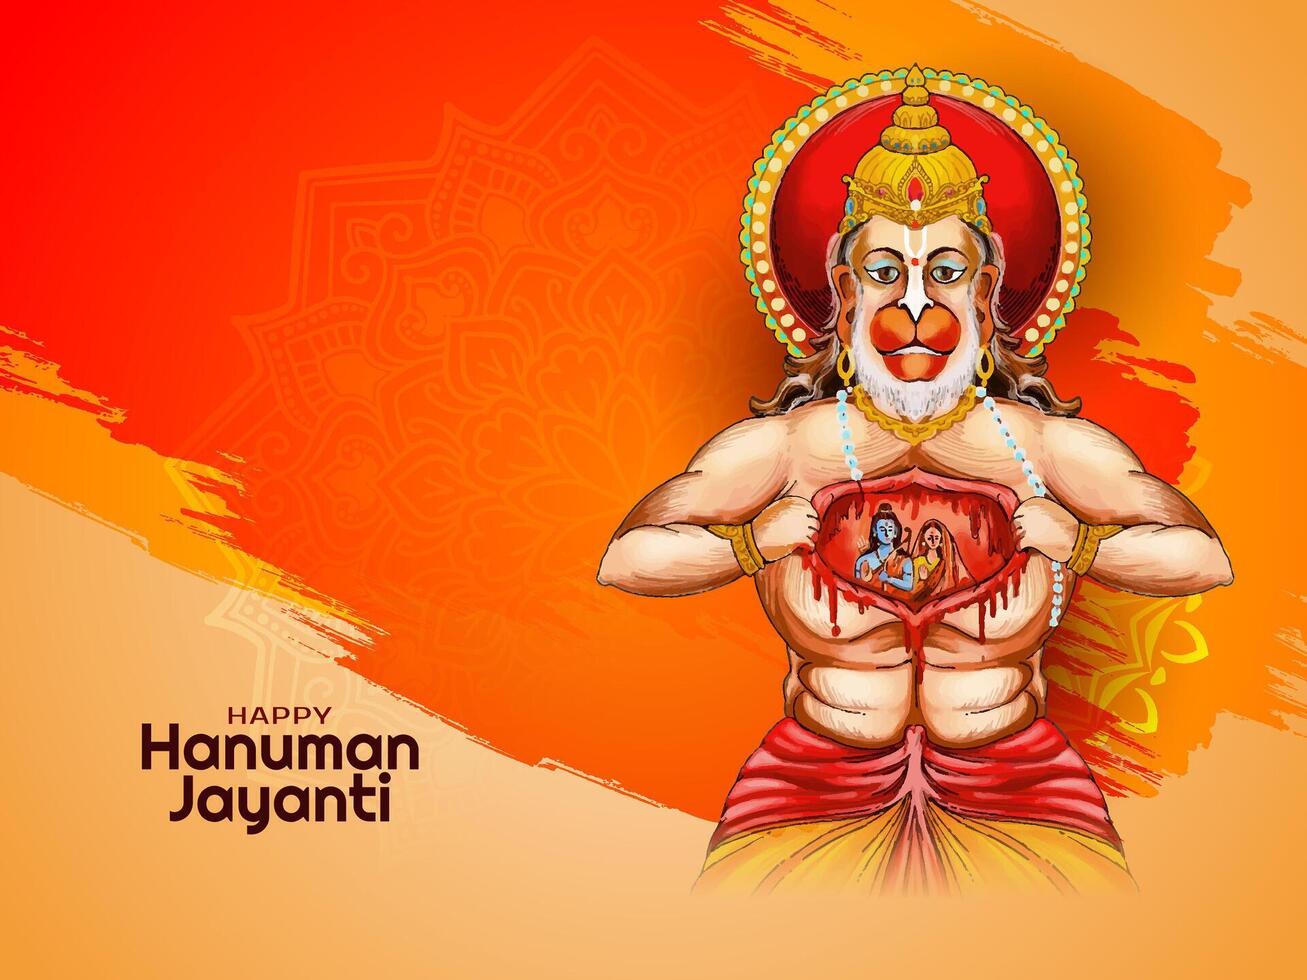 Happy Hanuman jayanti hindu festival background design vector